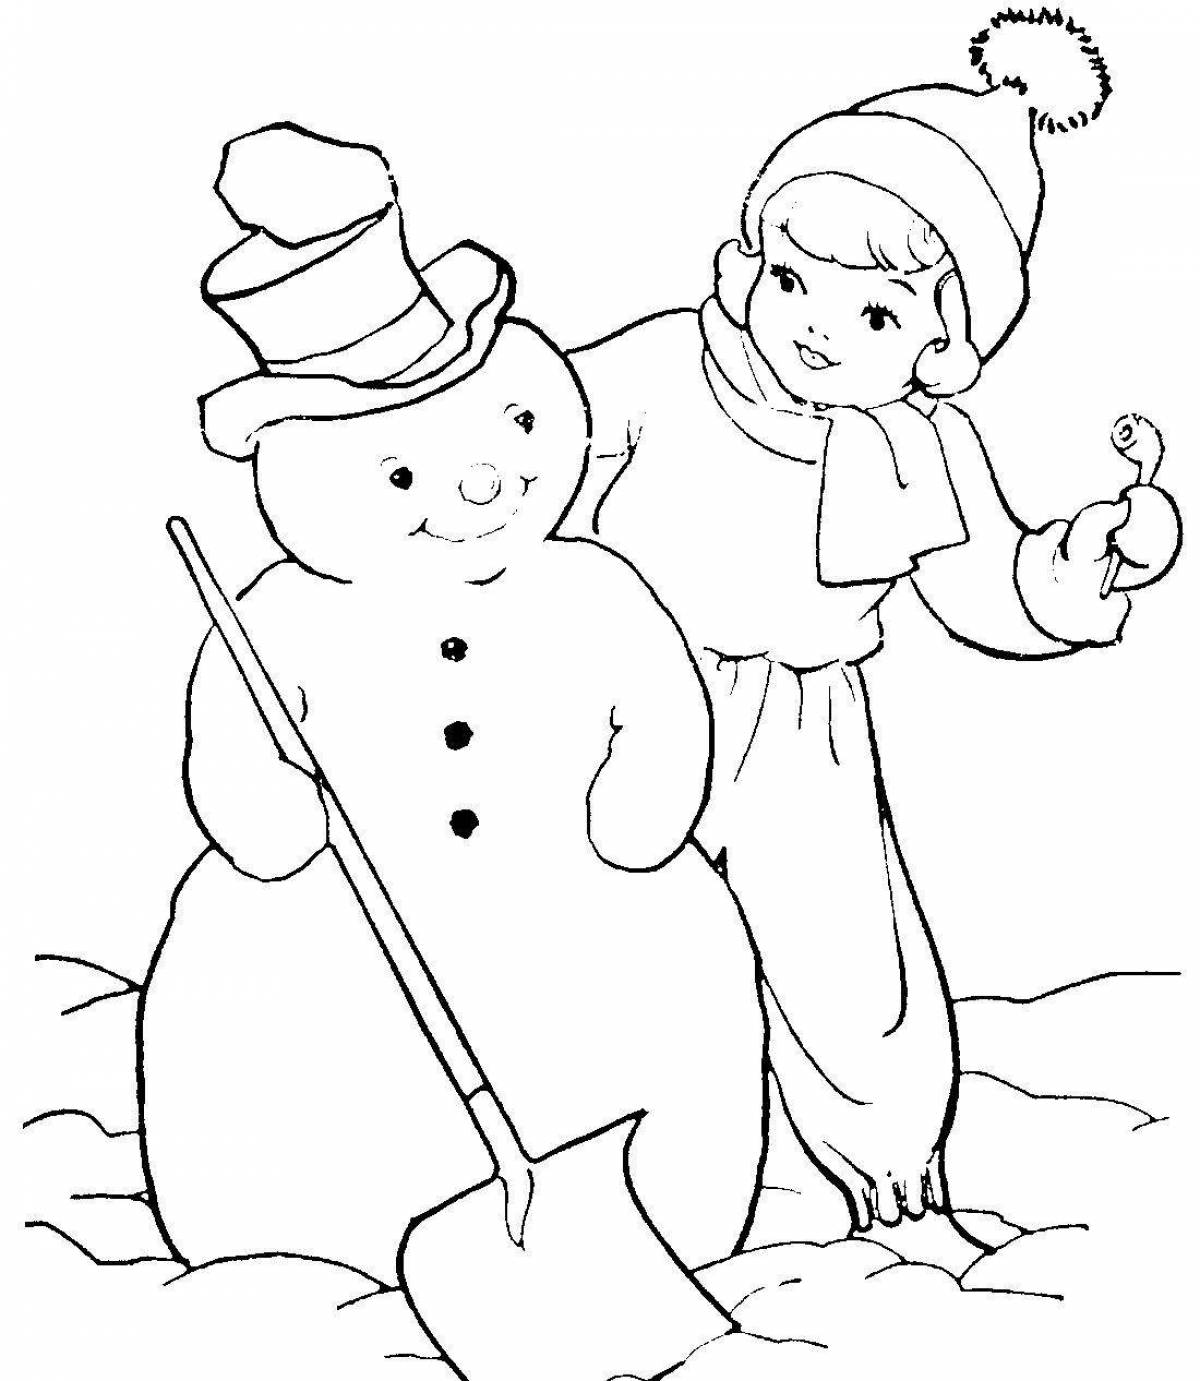 Children making a snowman #3